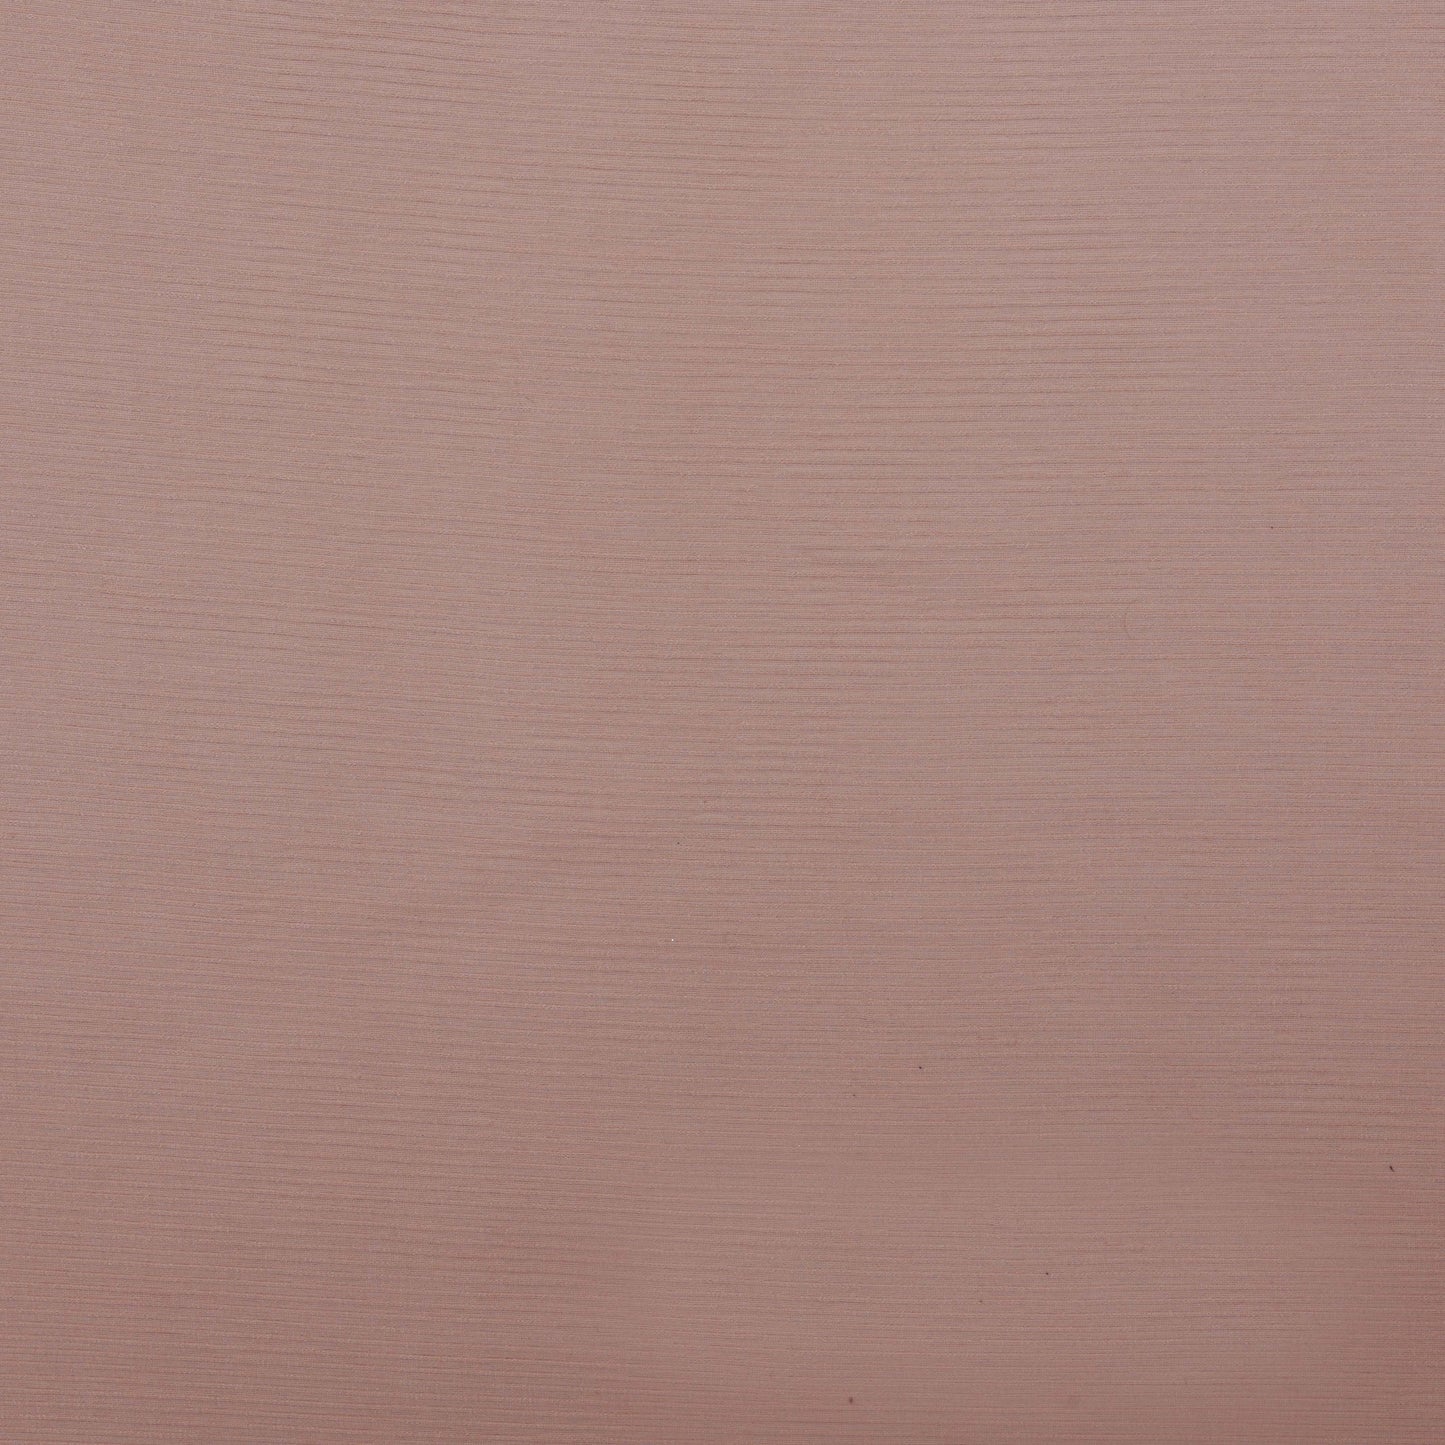 Solid Color Crush Satin Georgette Plain Fabric